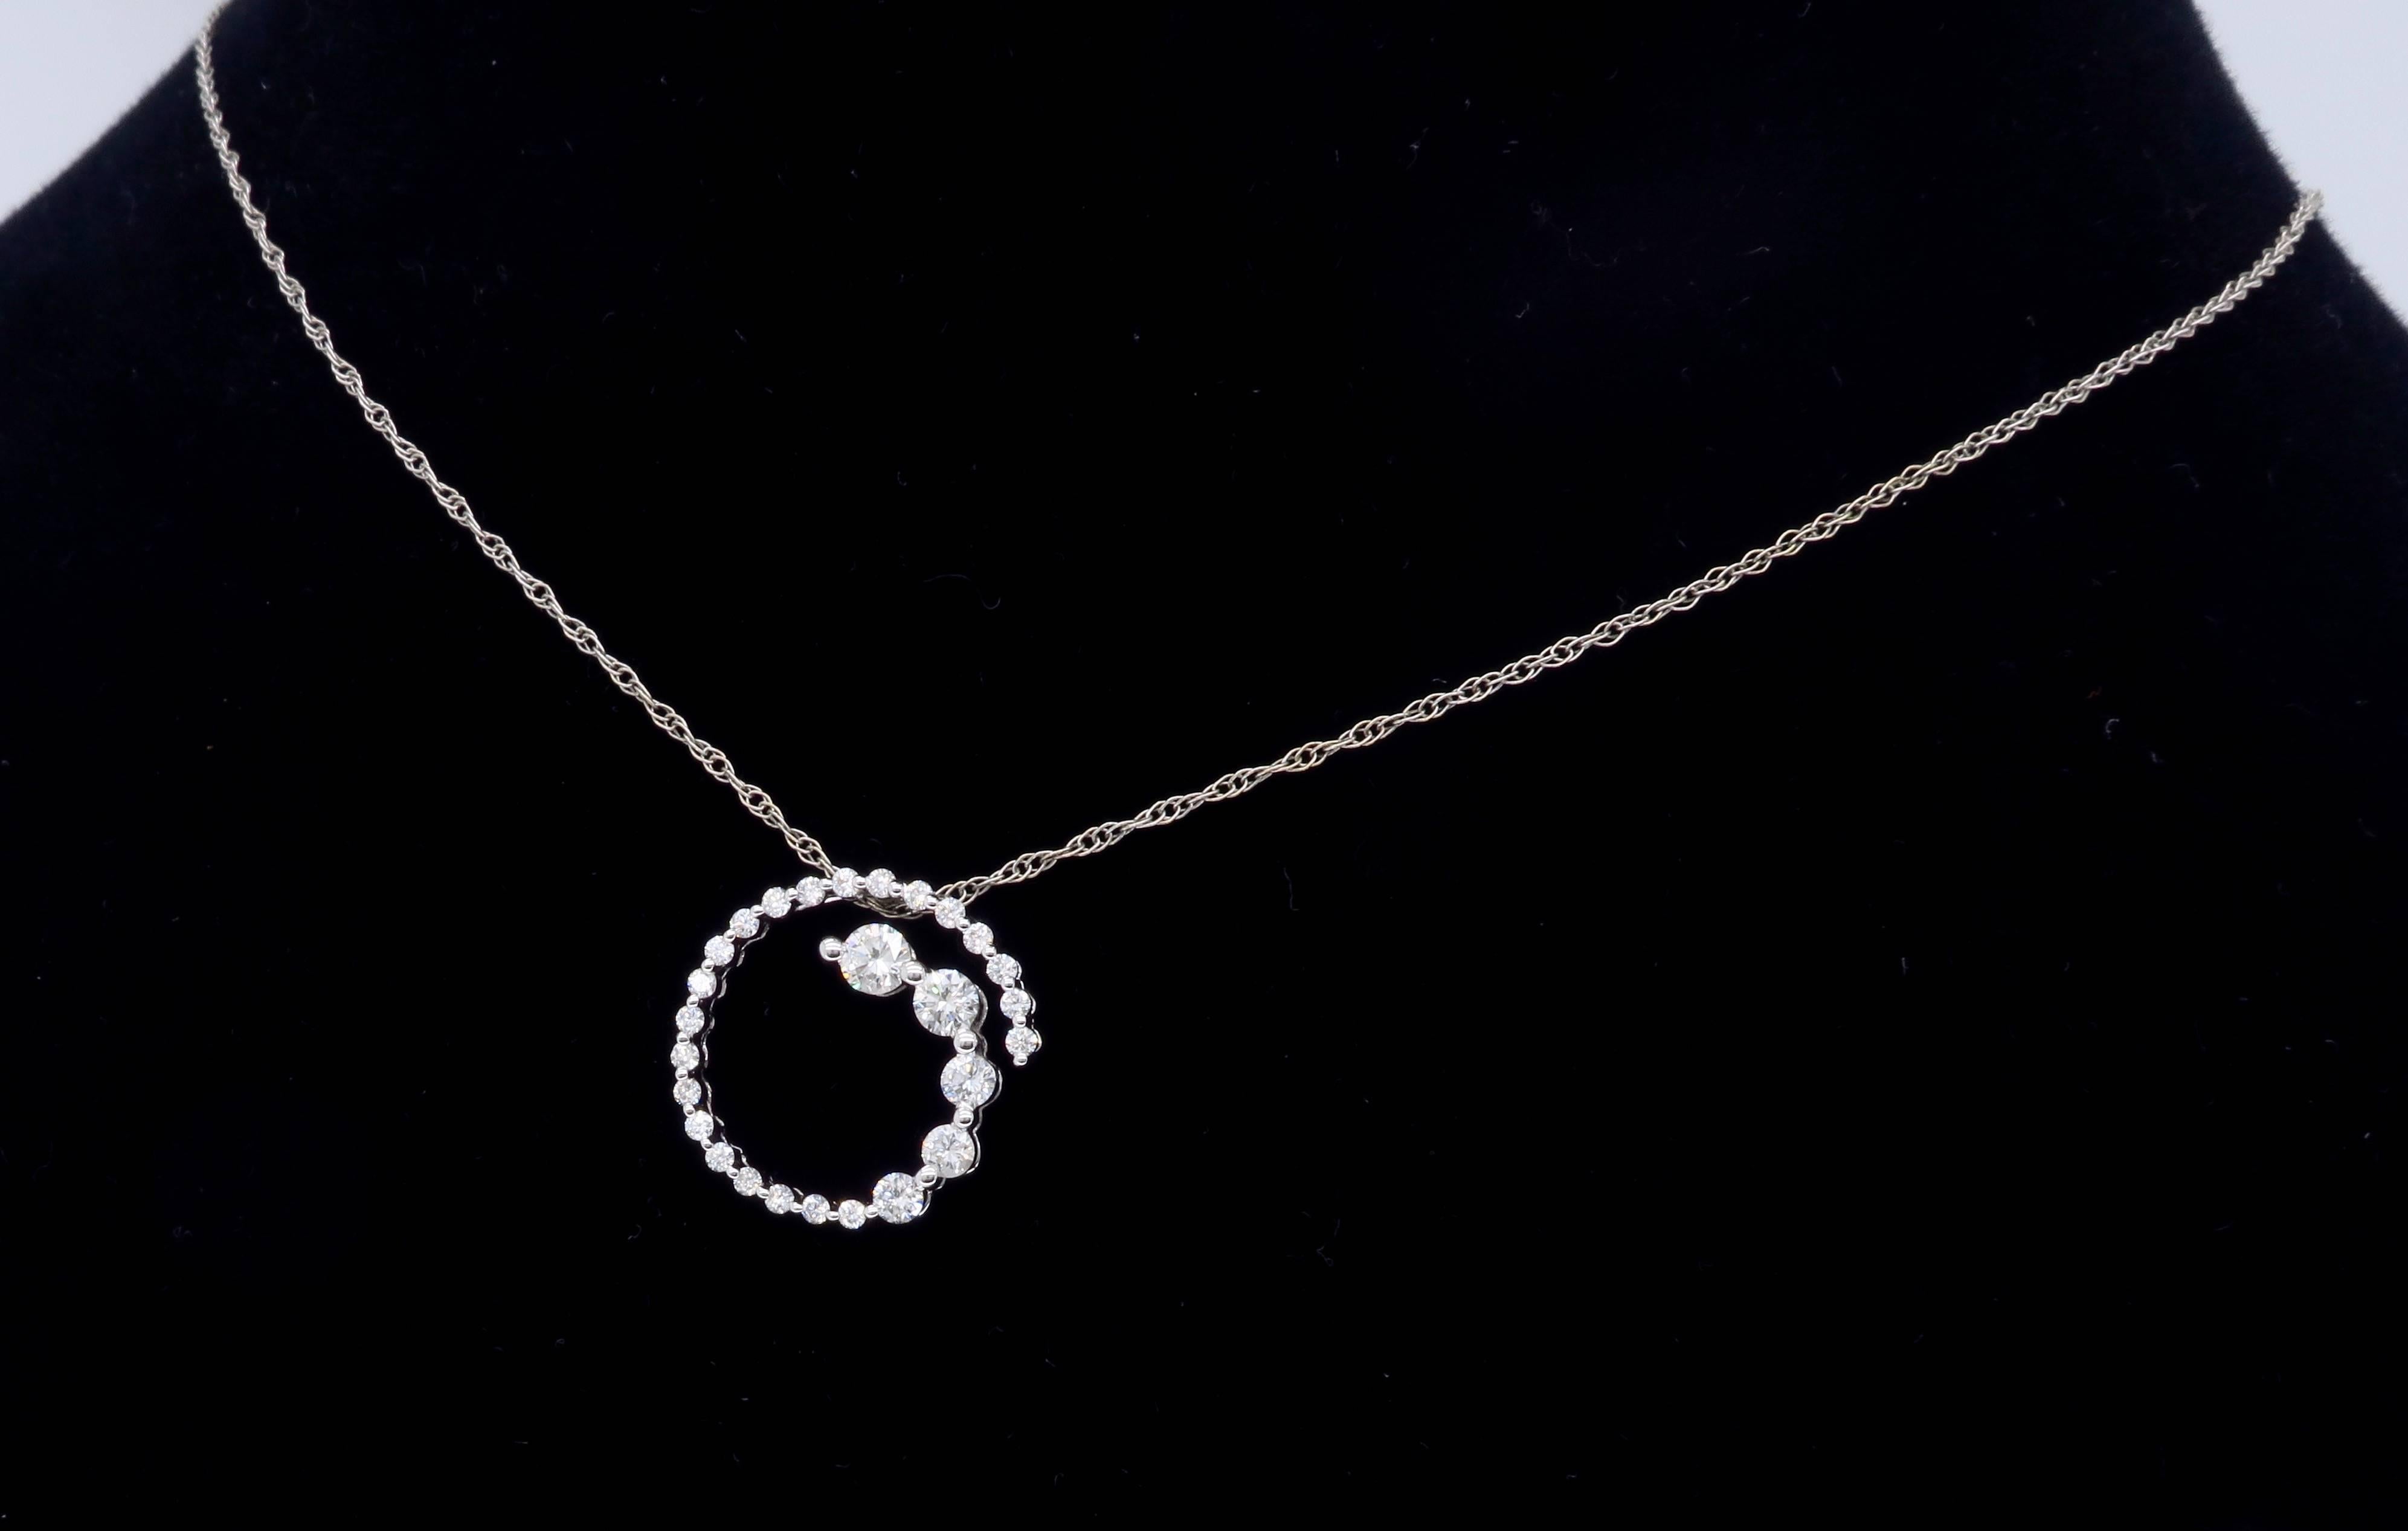  Diamond White Gold Pendant Chain Necklace  4